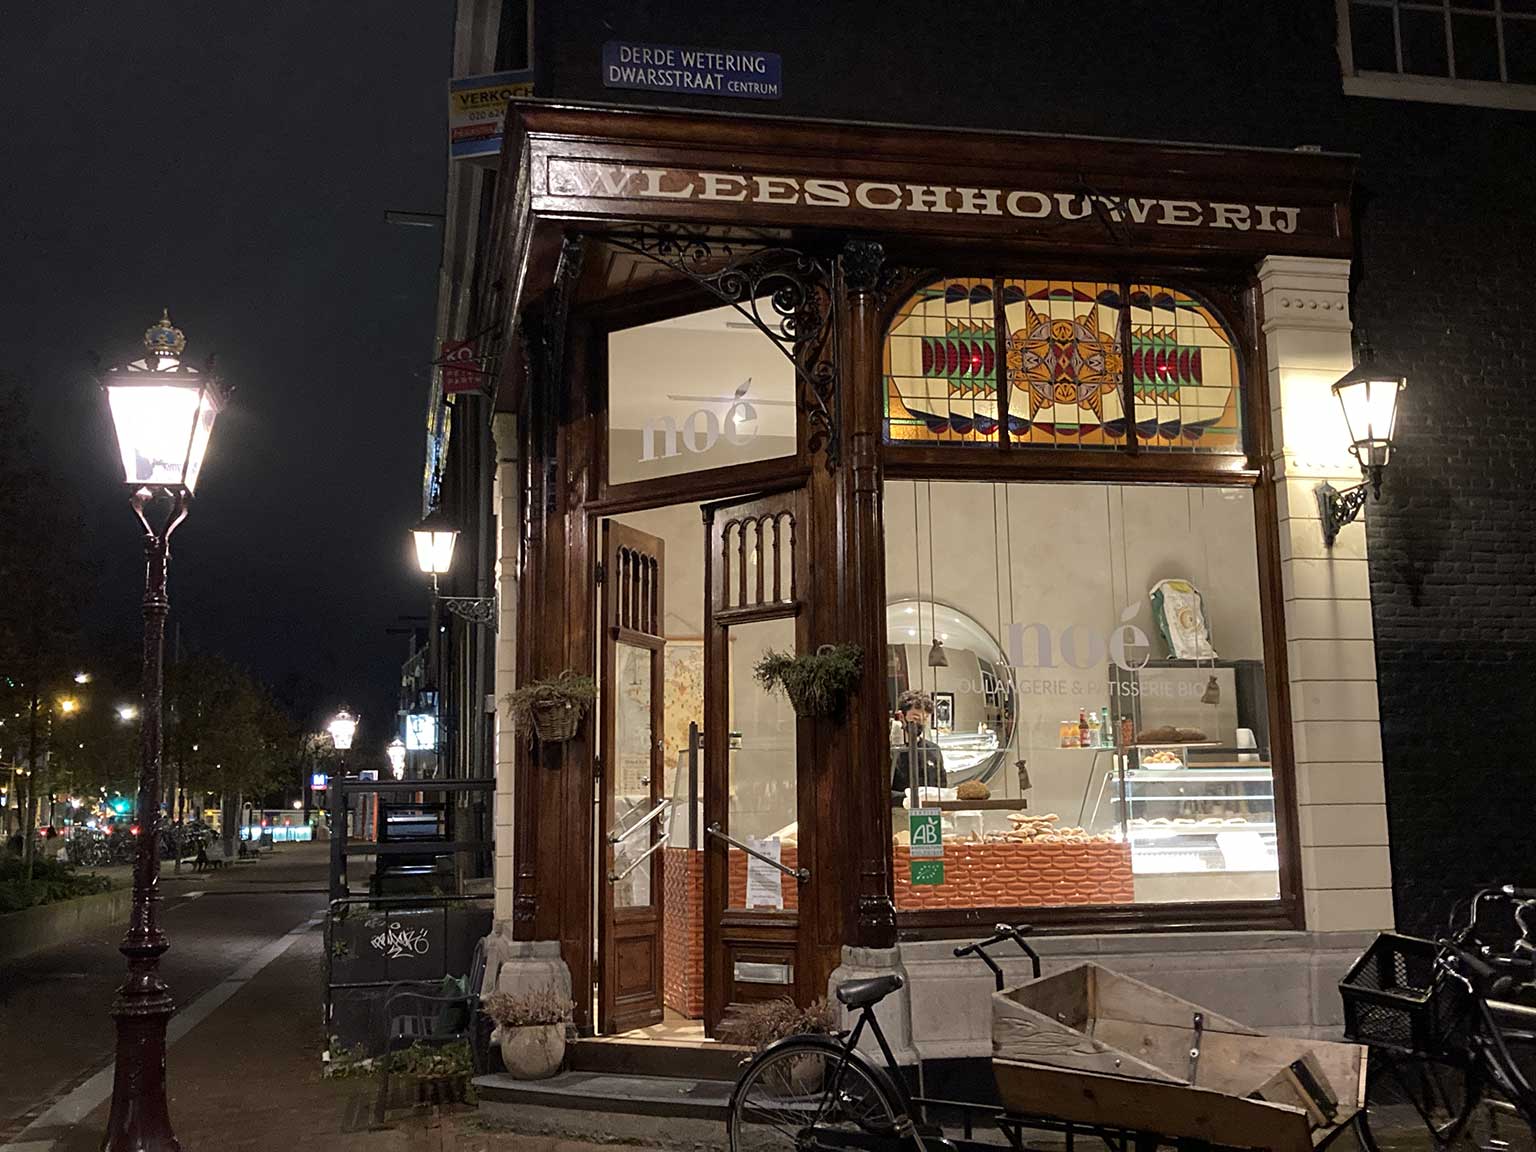 Boulangerie Noé at Vijzelgracht 20, Amsterdam, corner Derde Weteringdwarsstraat